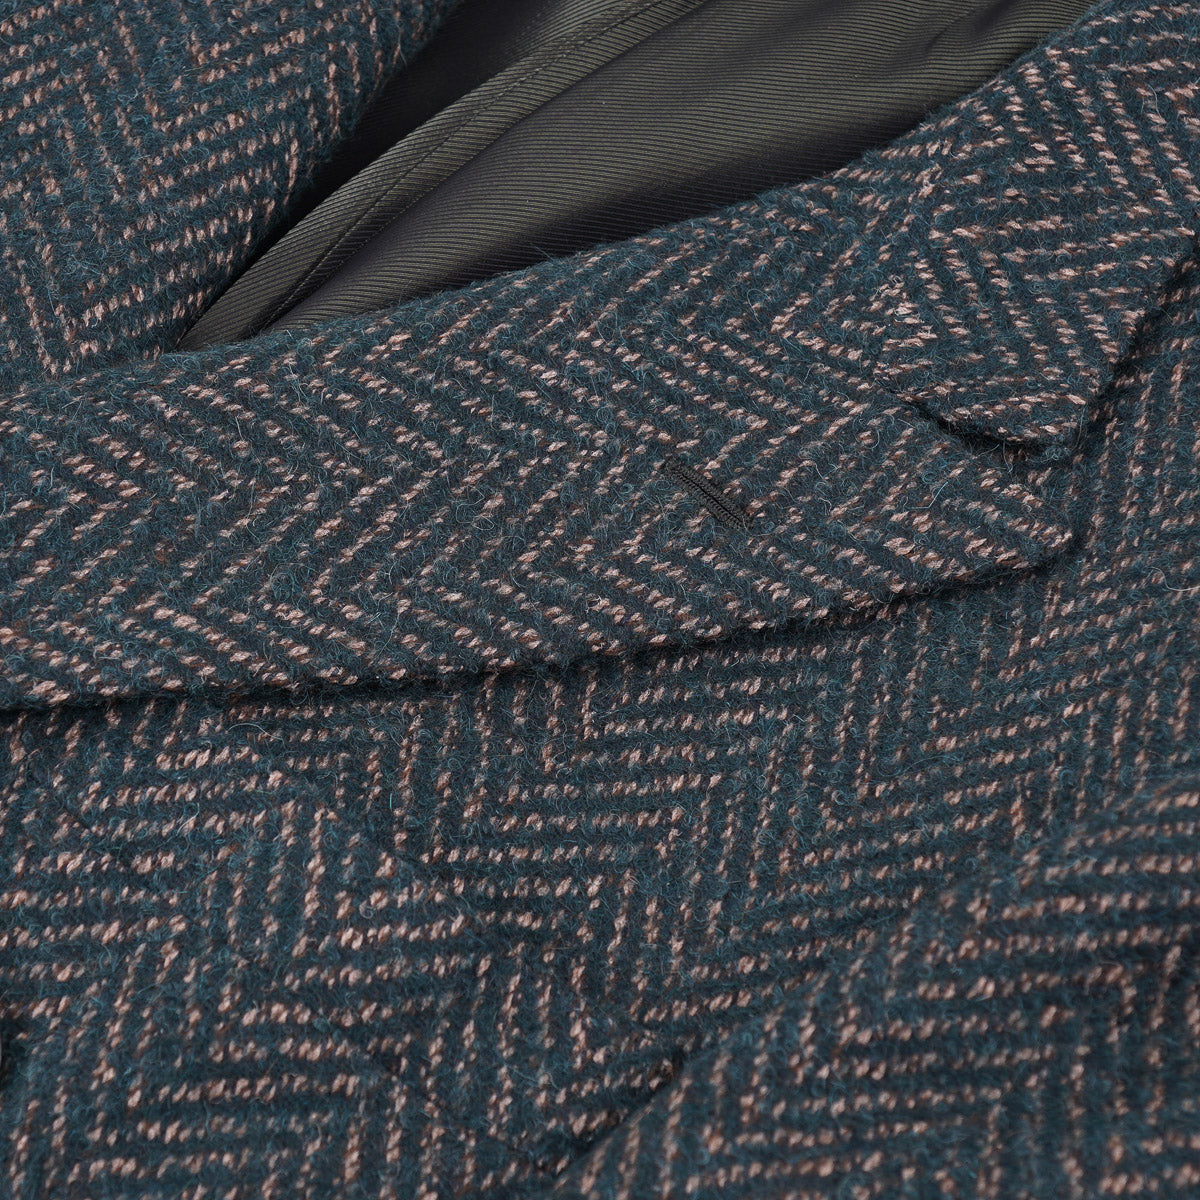 Kiton Cashmere-Alpaca-Wool Overcoat - Top Shelf Apparel